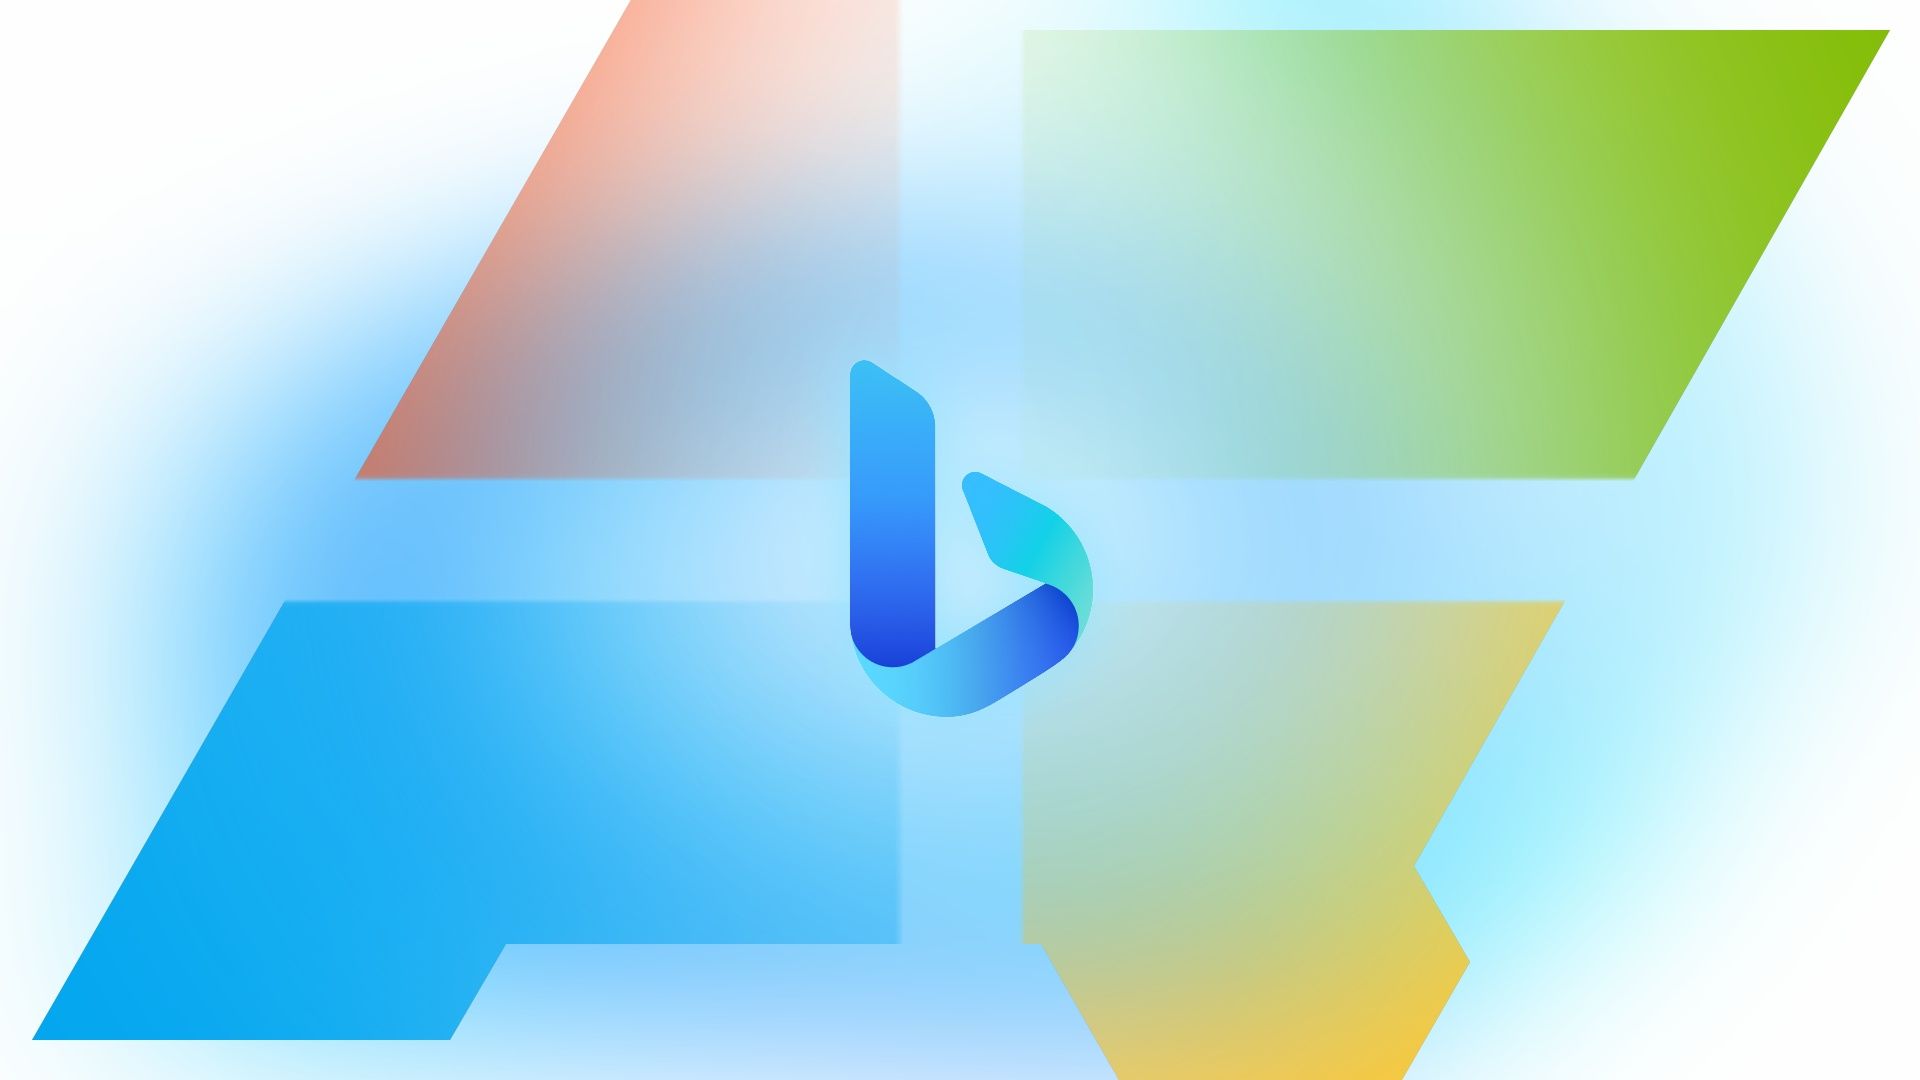 The Microsoft Bing logo